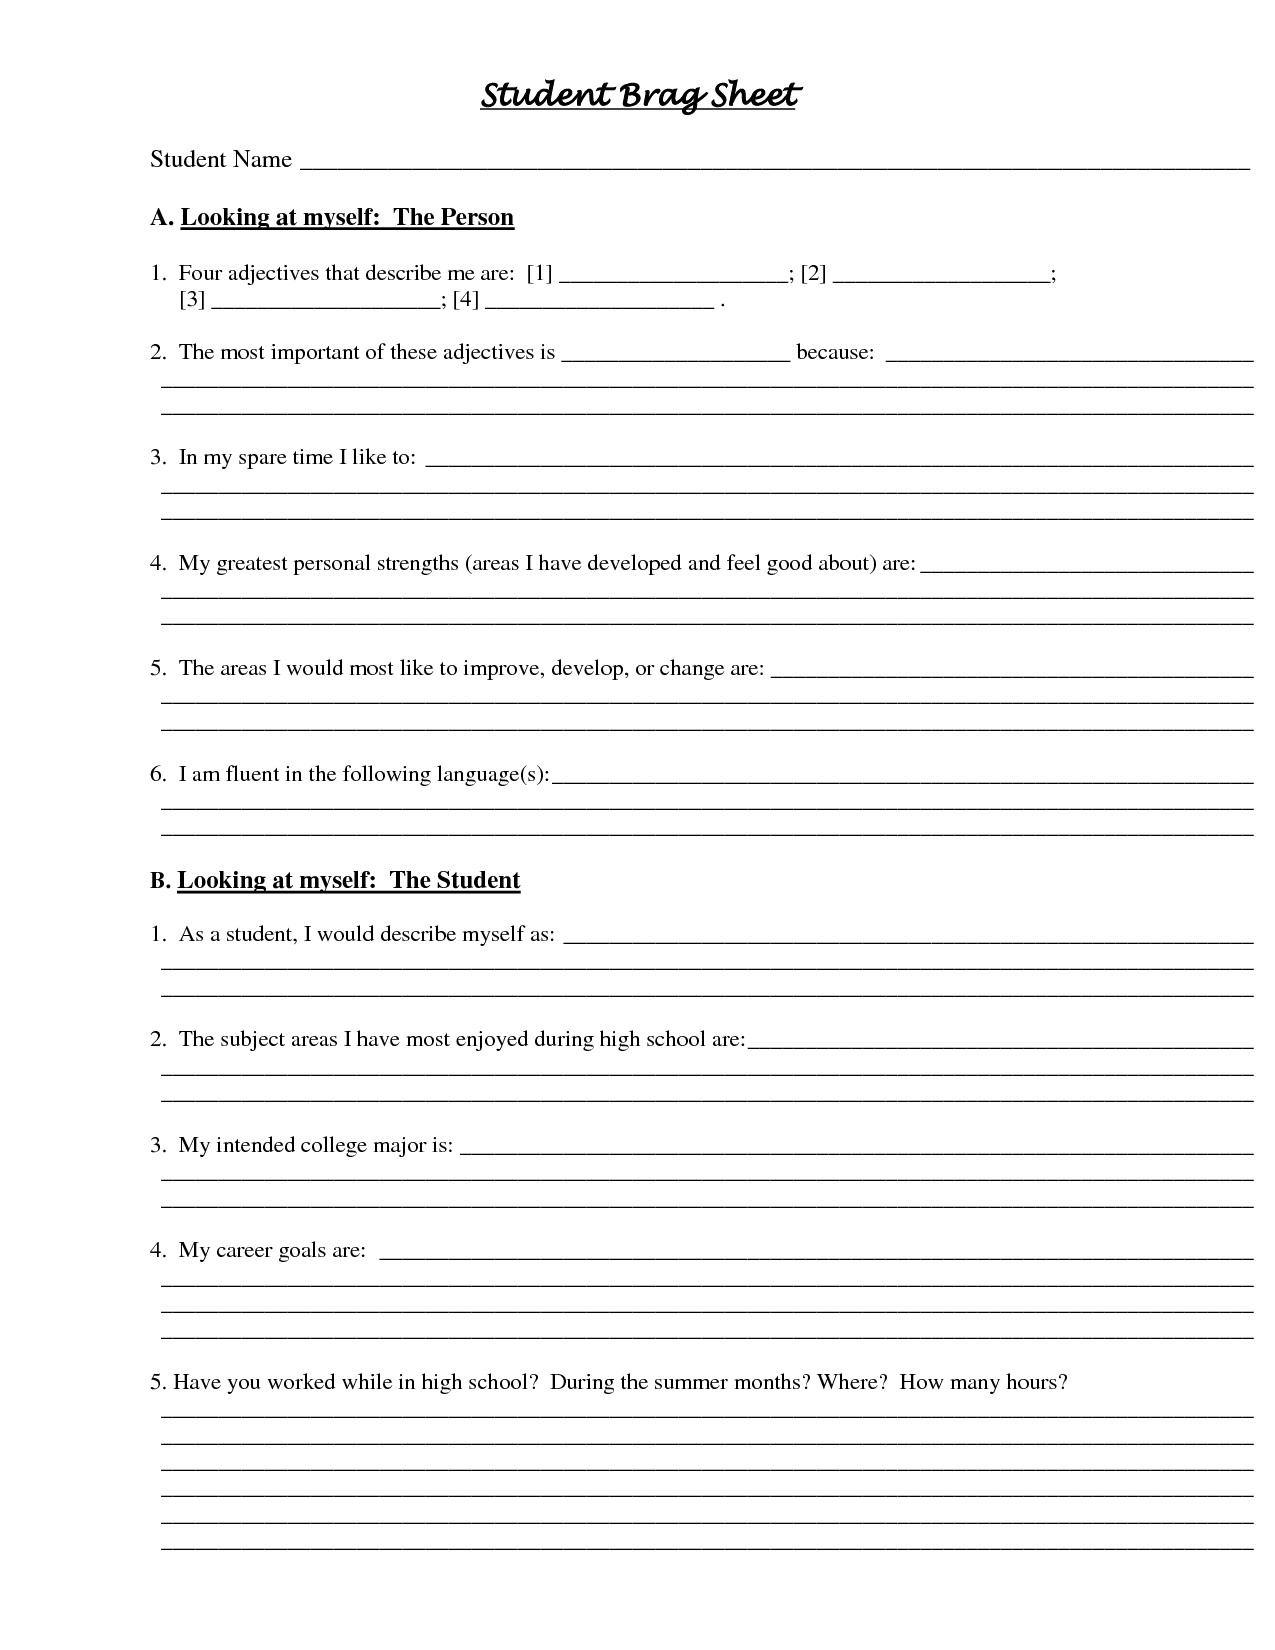 Student Brag Sheet – Doc | Student Information Sheet, High Pertaining To Student Information Card Template